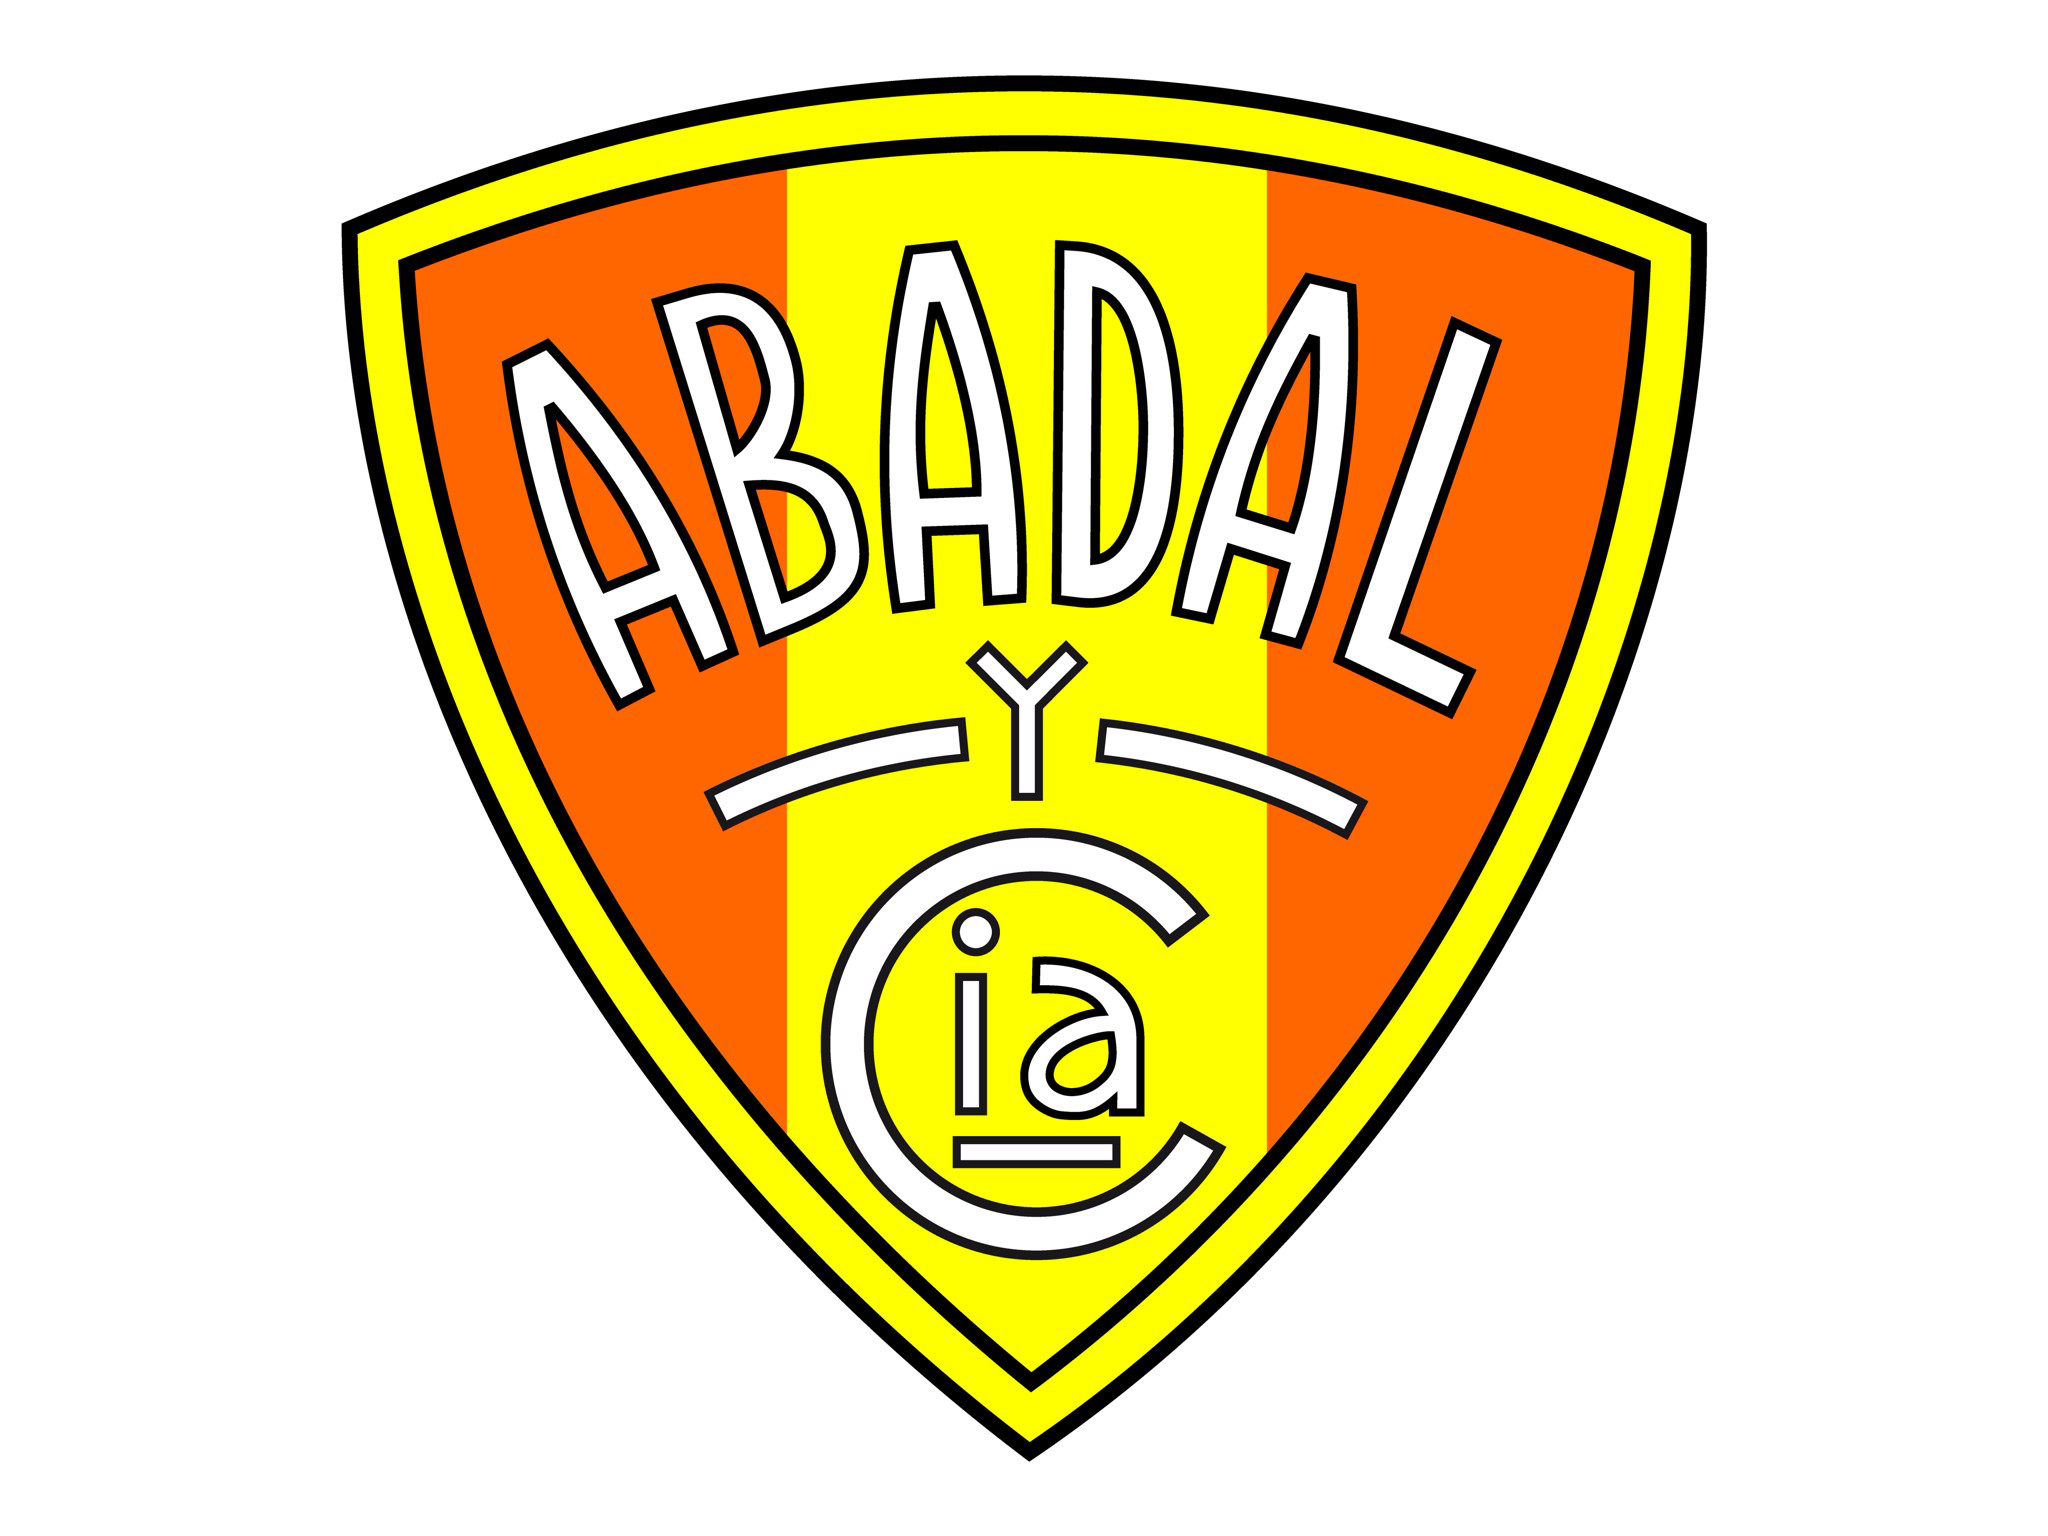 Abadal Logo Wallpaper